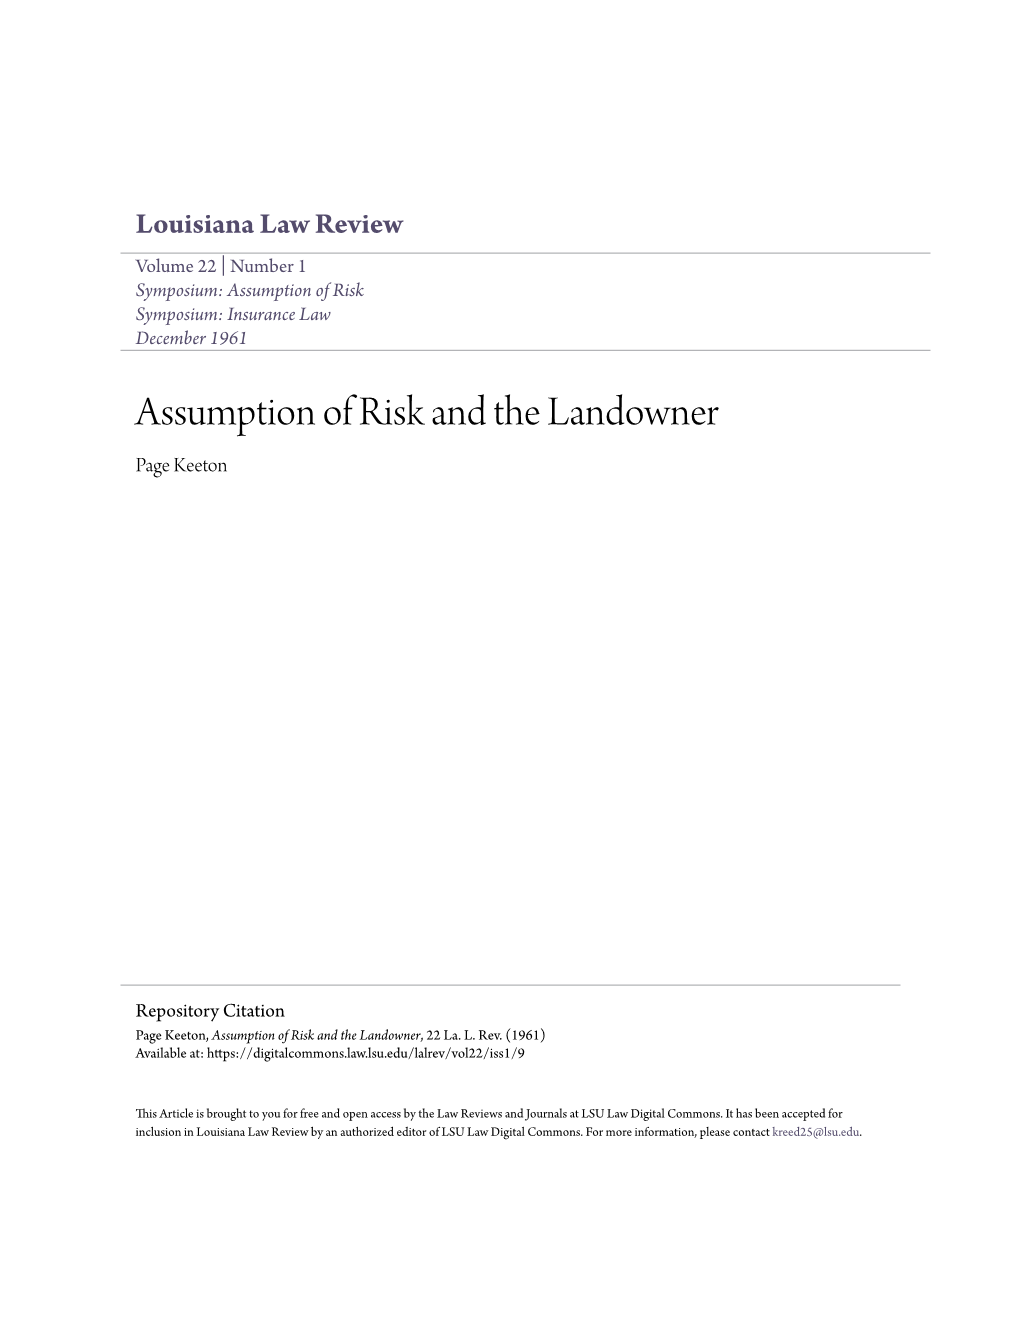 Assumption of Risk and the Landowner Page Keeton